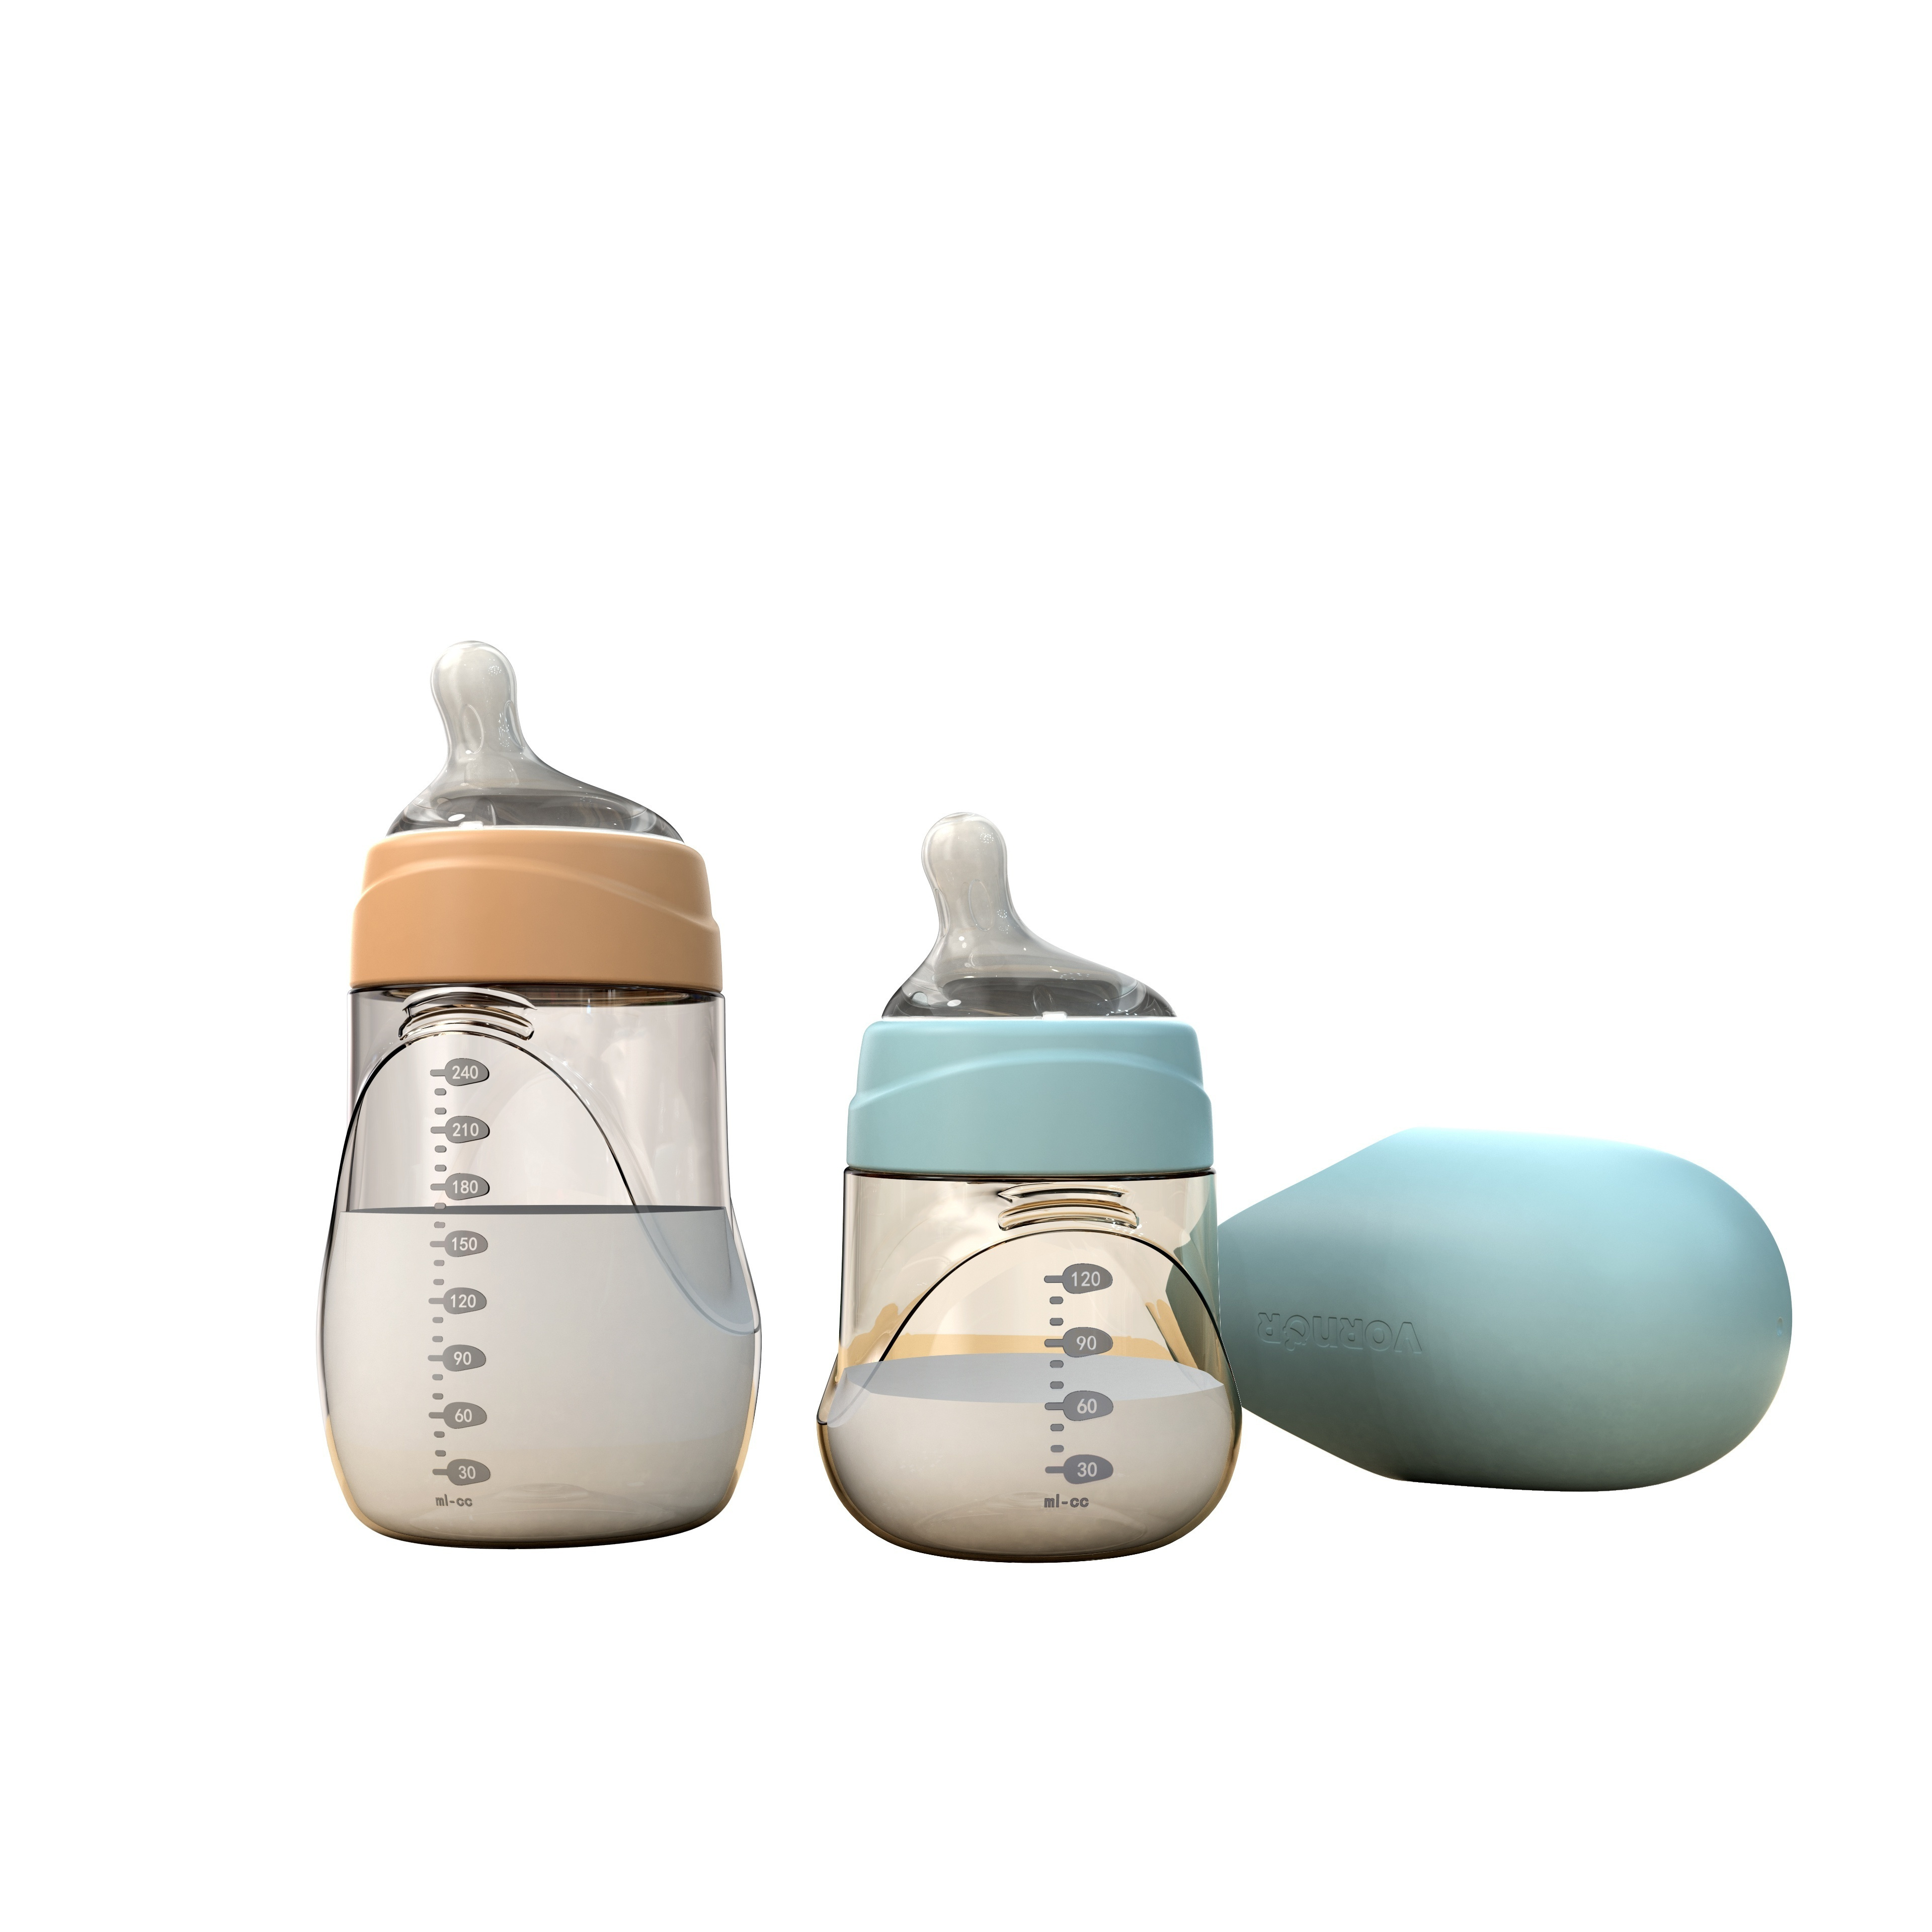 Bröstmjölksflaskor, Amningsflaskor